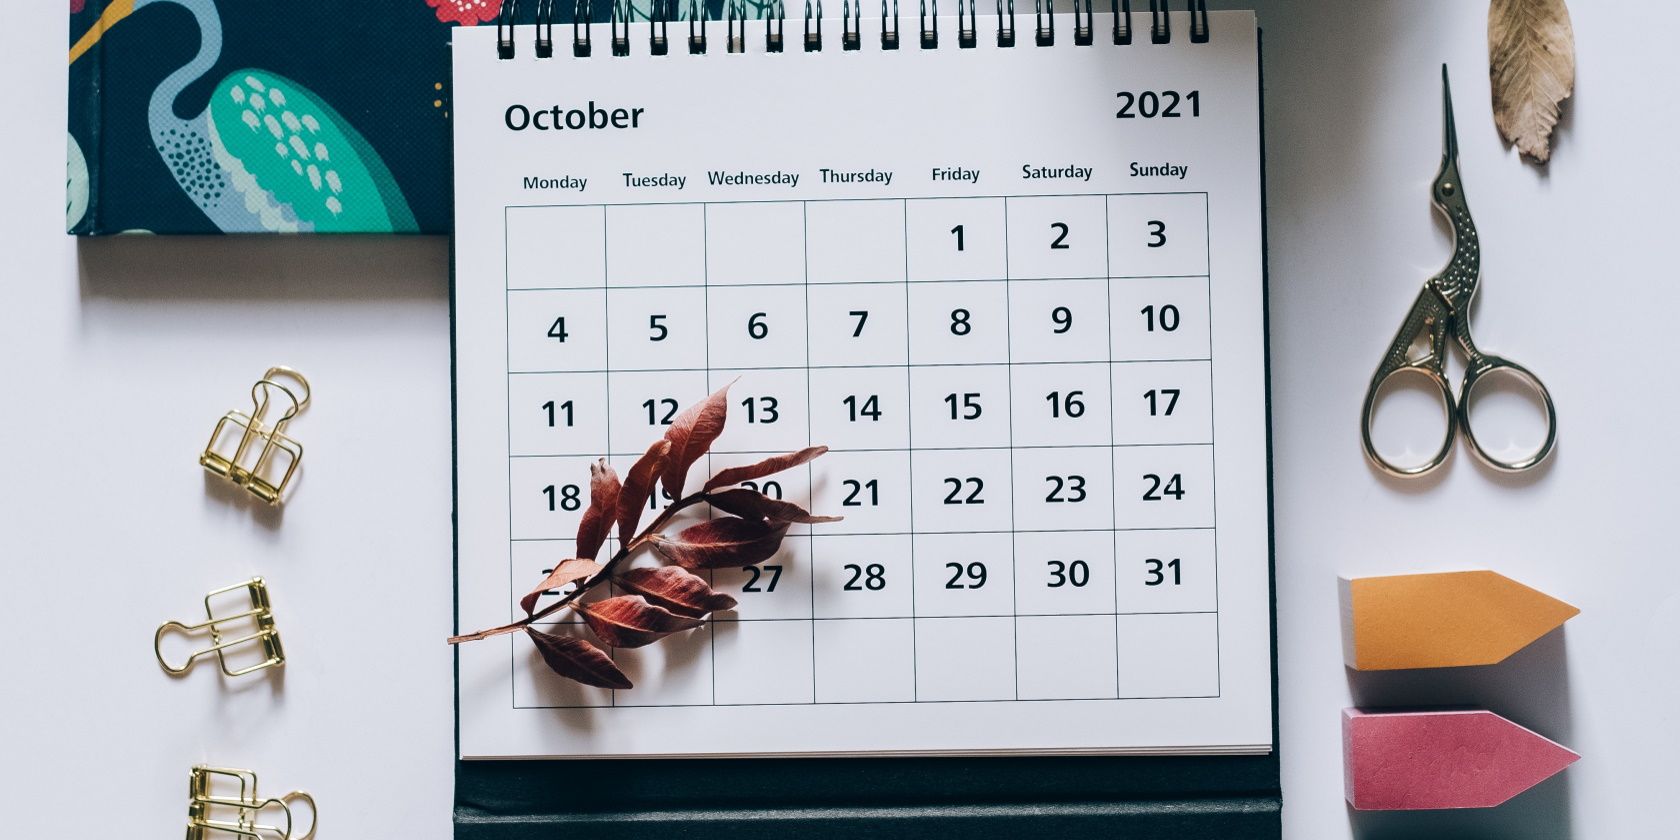 table calendar displaying october 2021